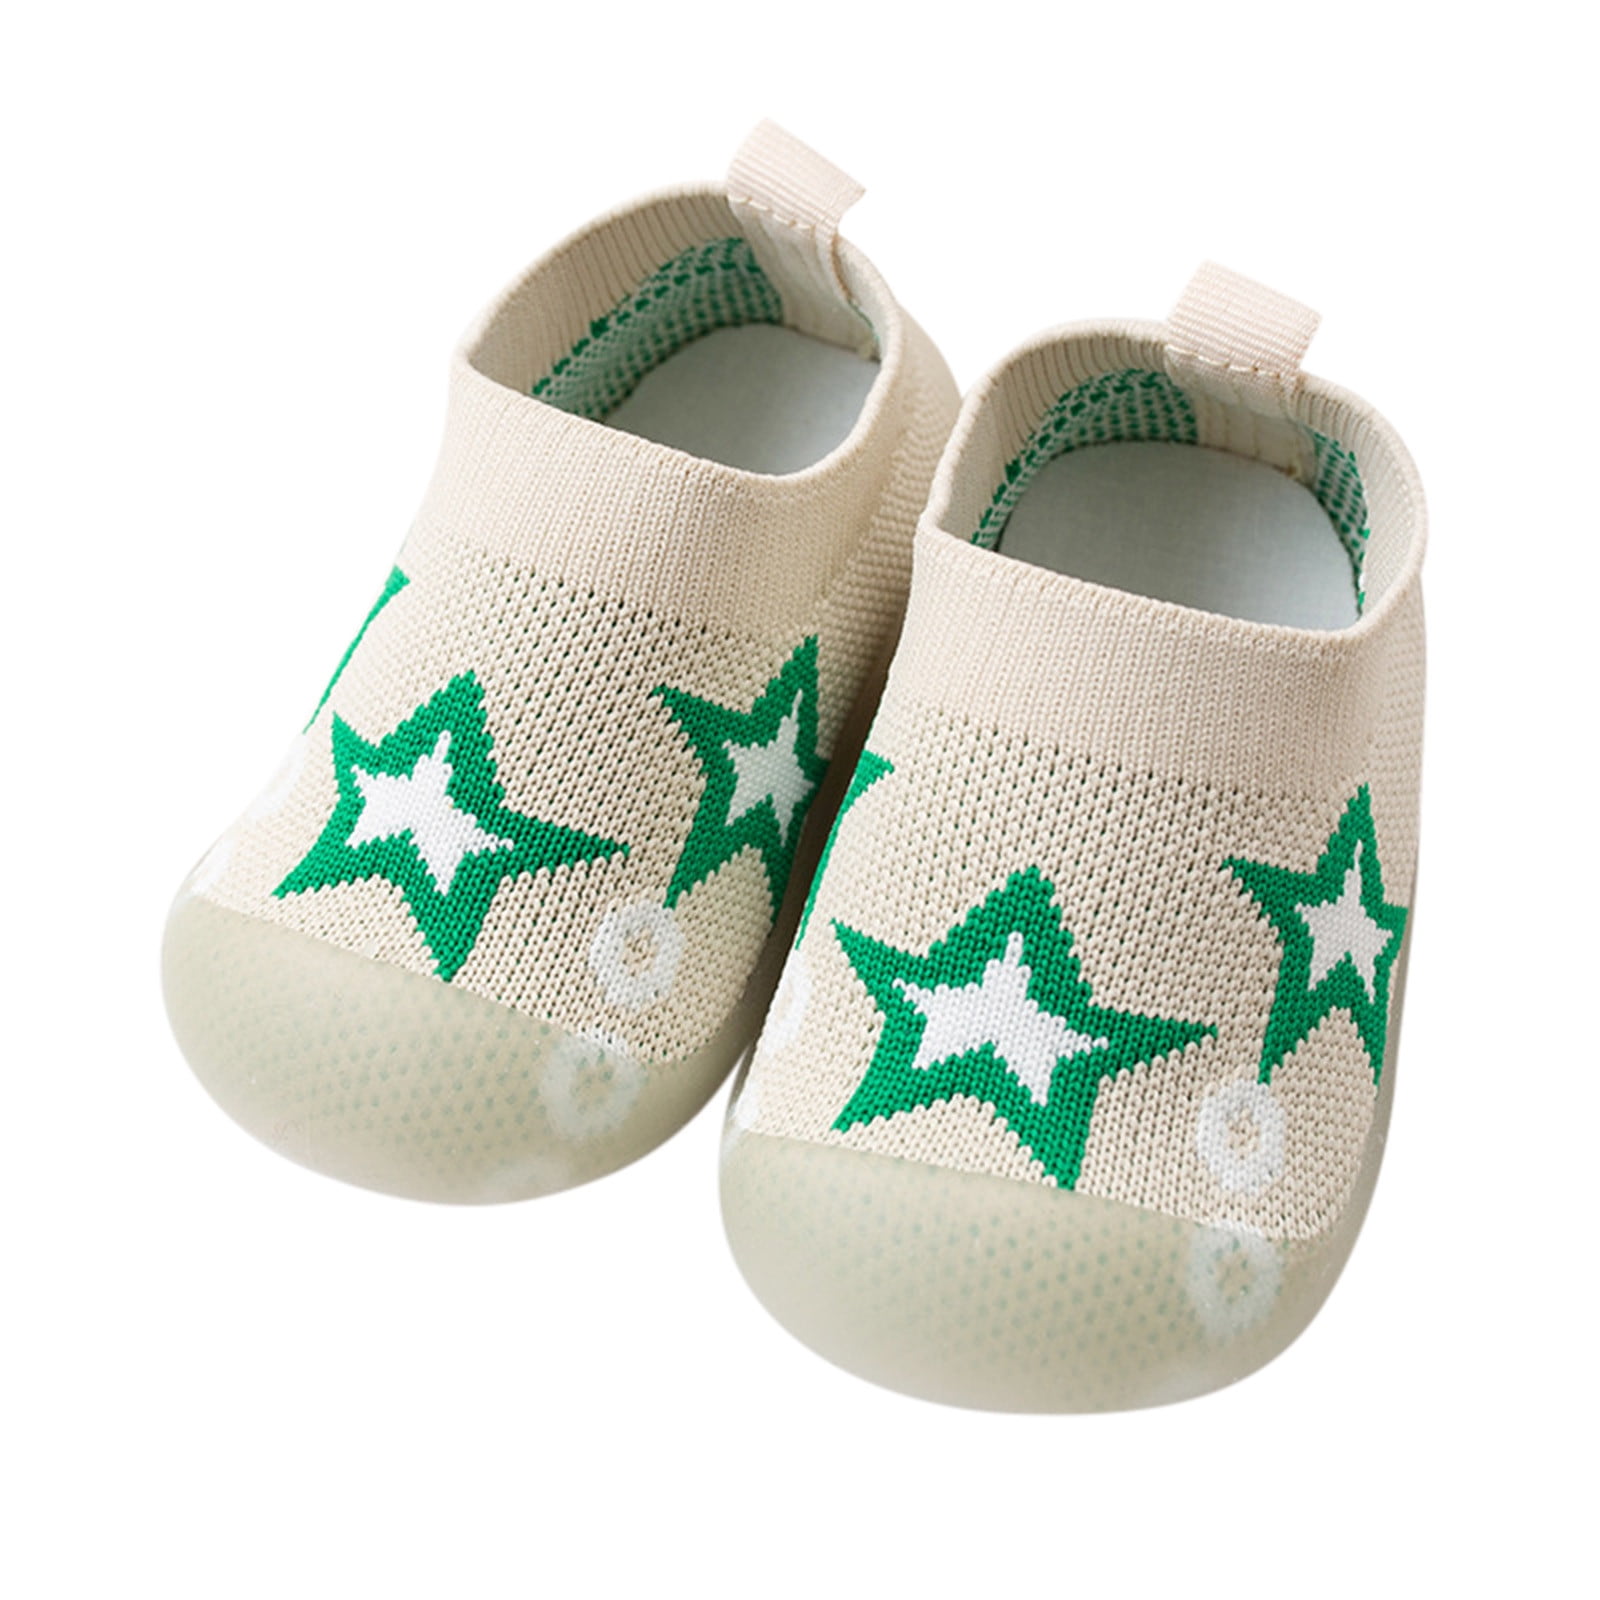 JDEFEG Kids Slip On Shoes Baby Solid Girls Soft Dance Shoes